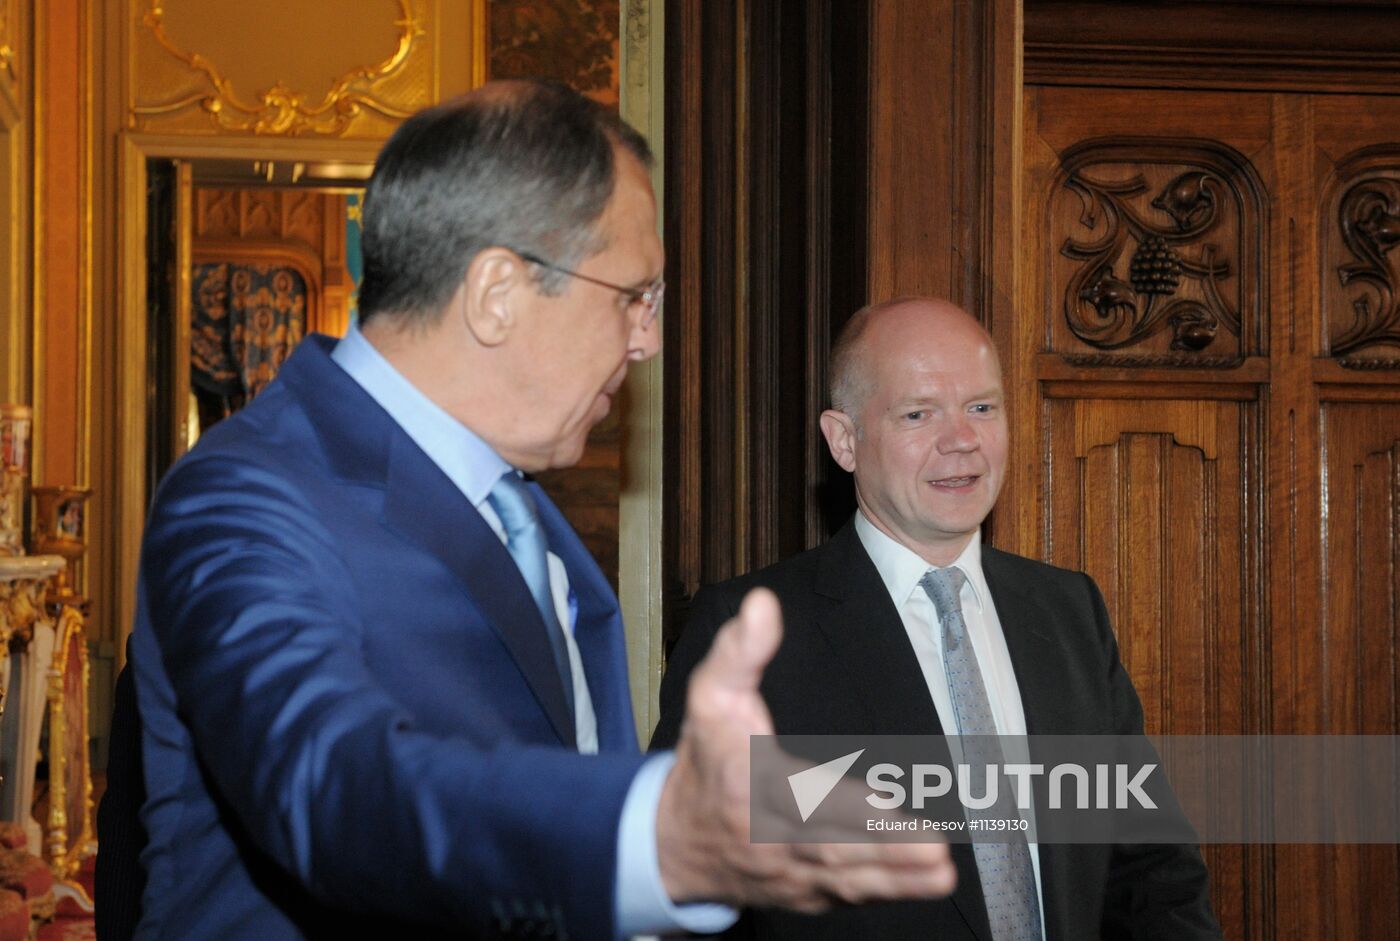 Sergei Lavrov meets with William Hague